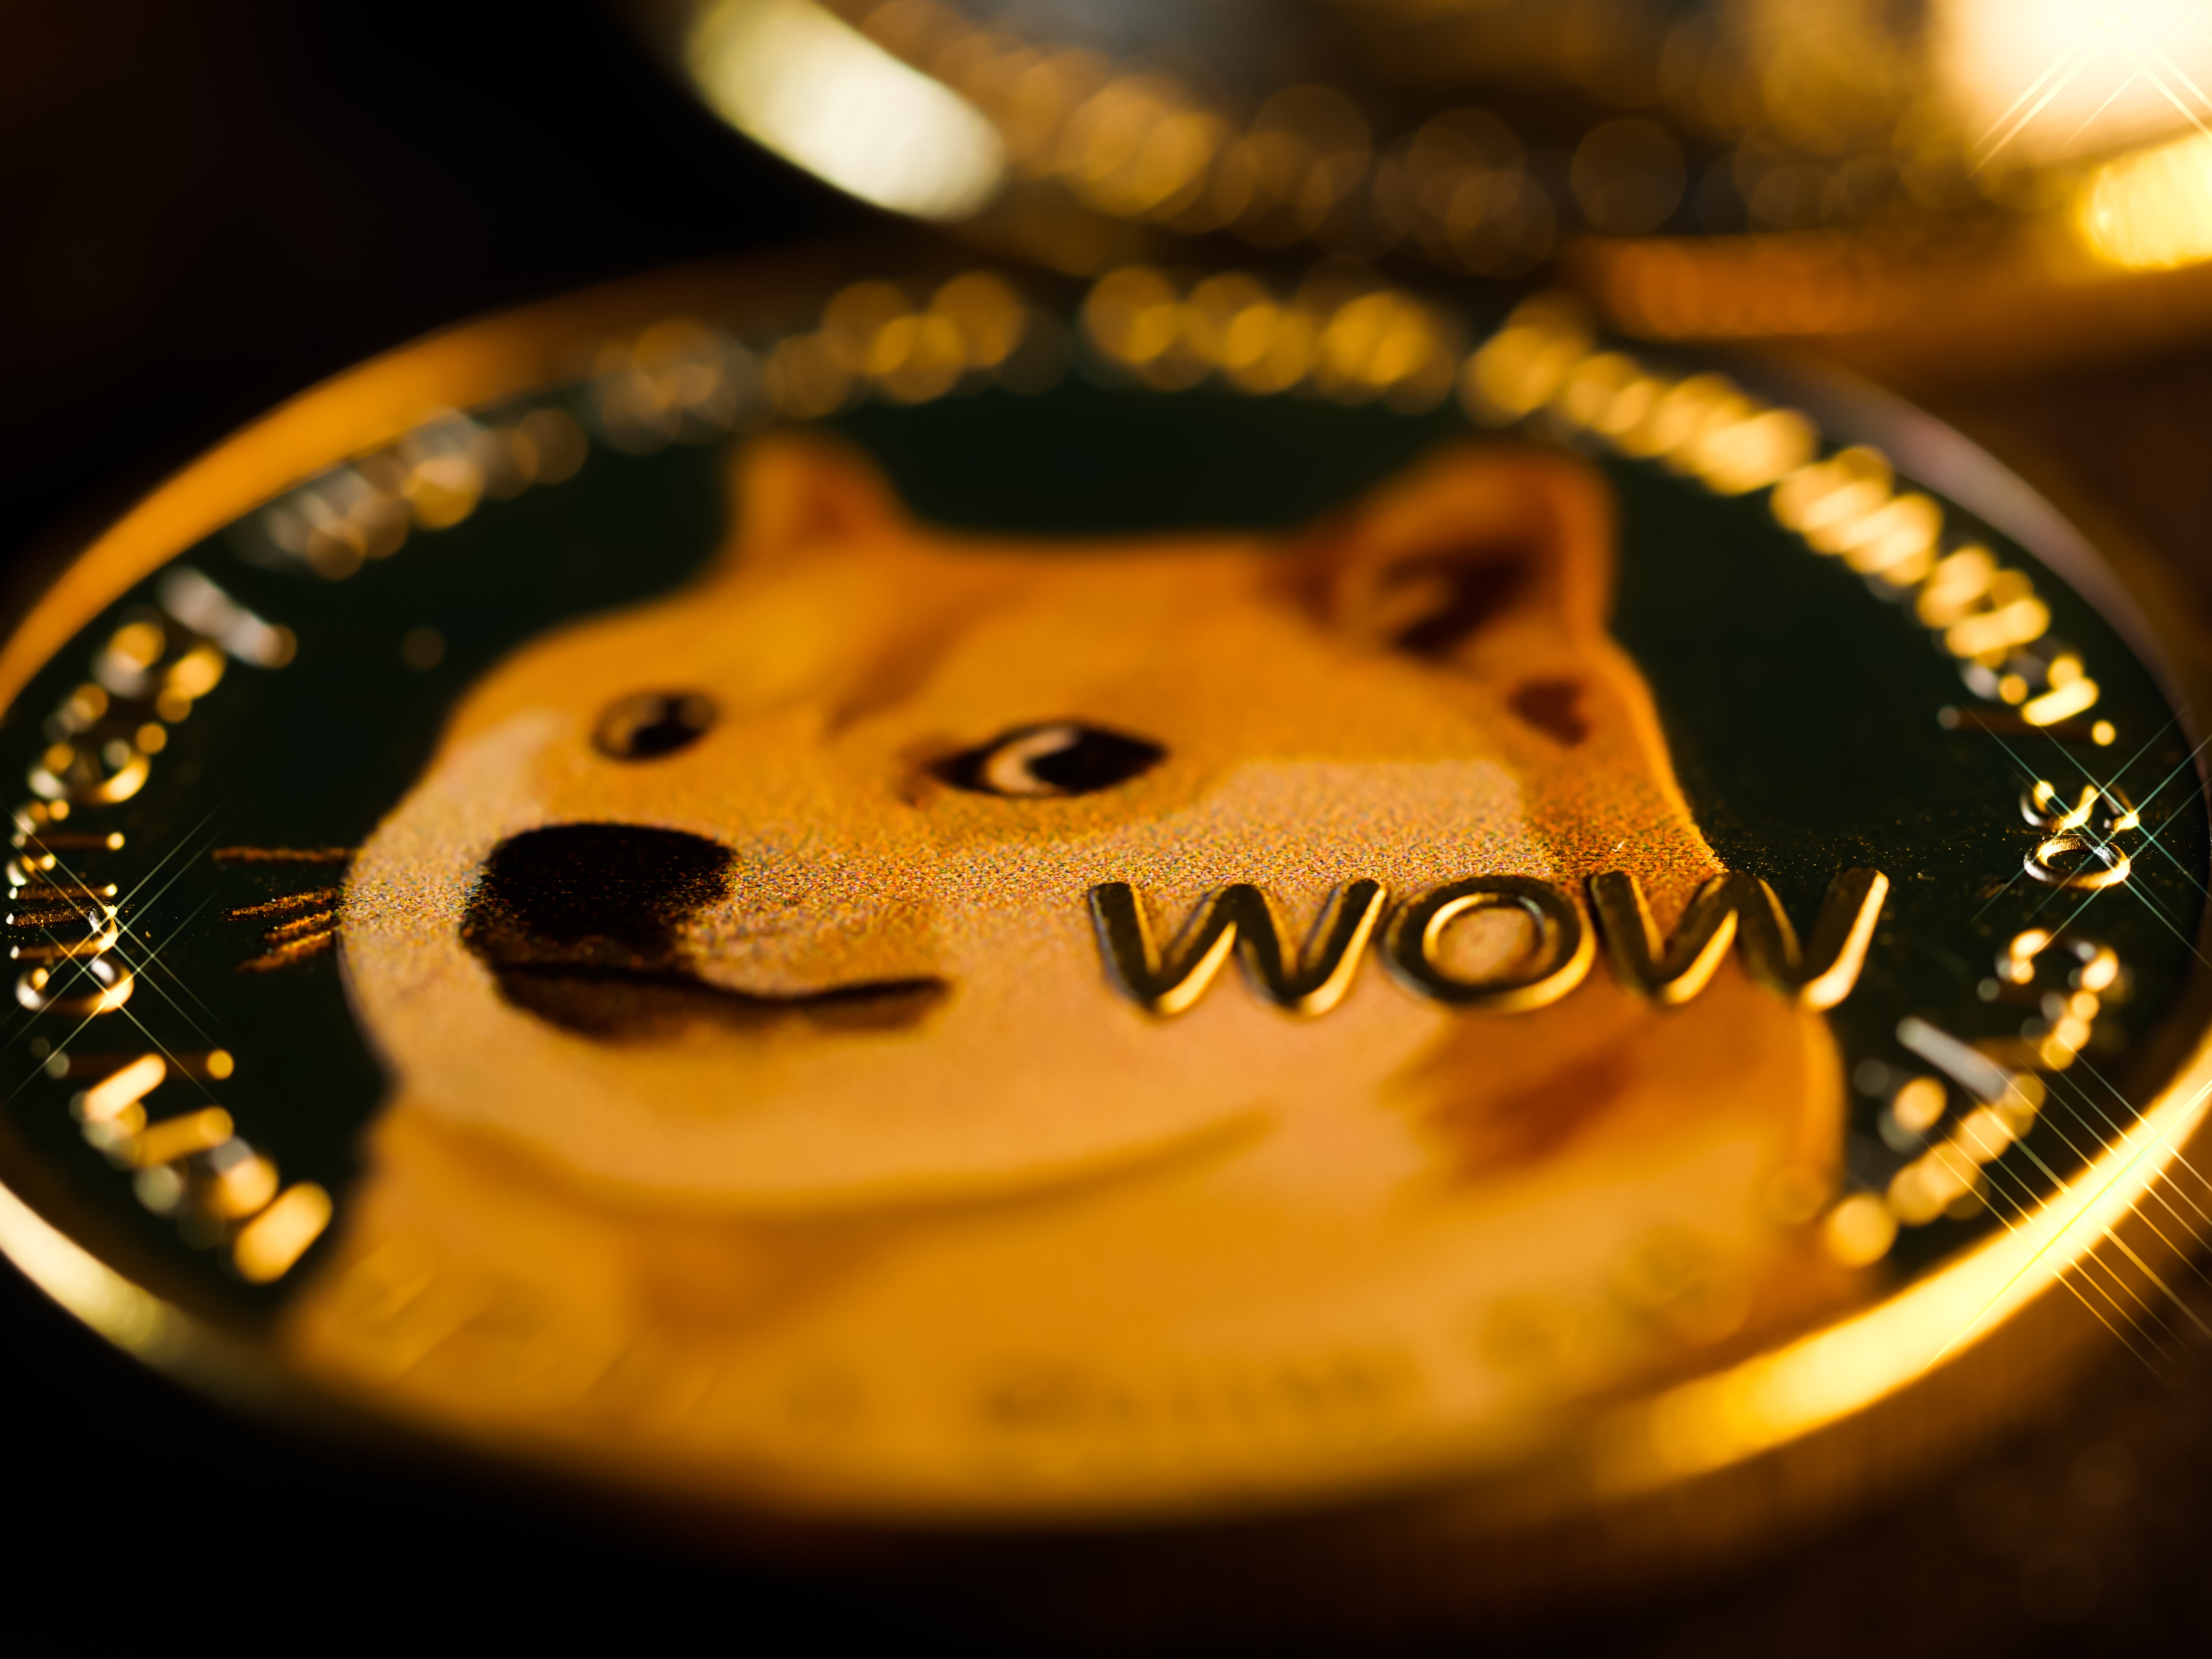 The Shiba Inu Dogecoin logo on a coin.